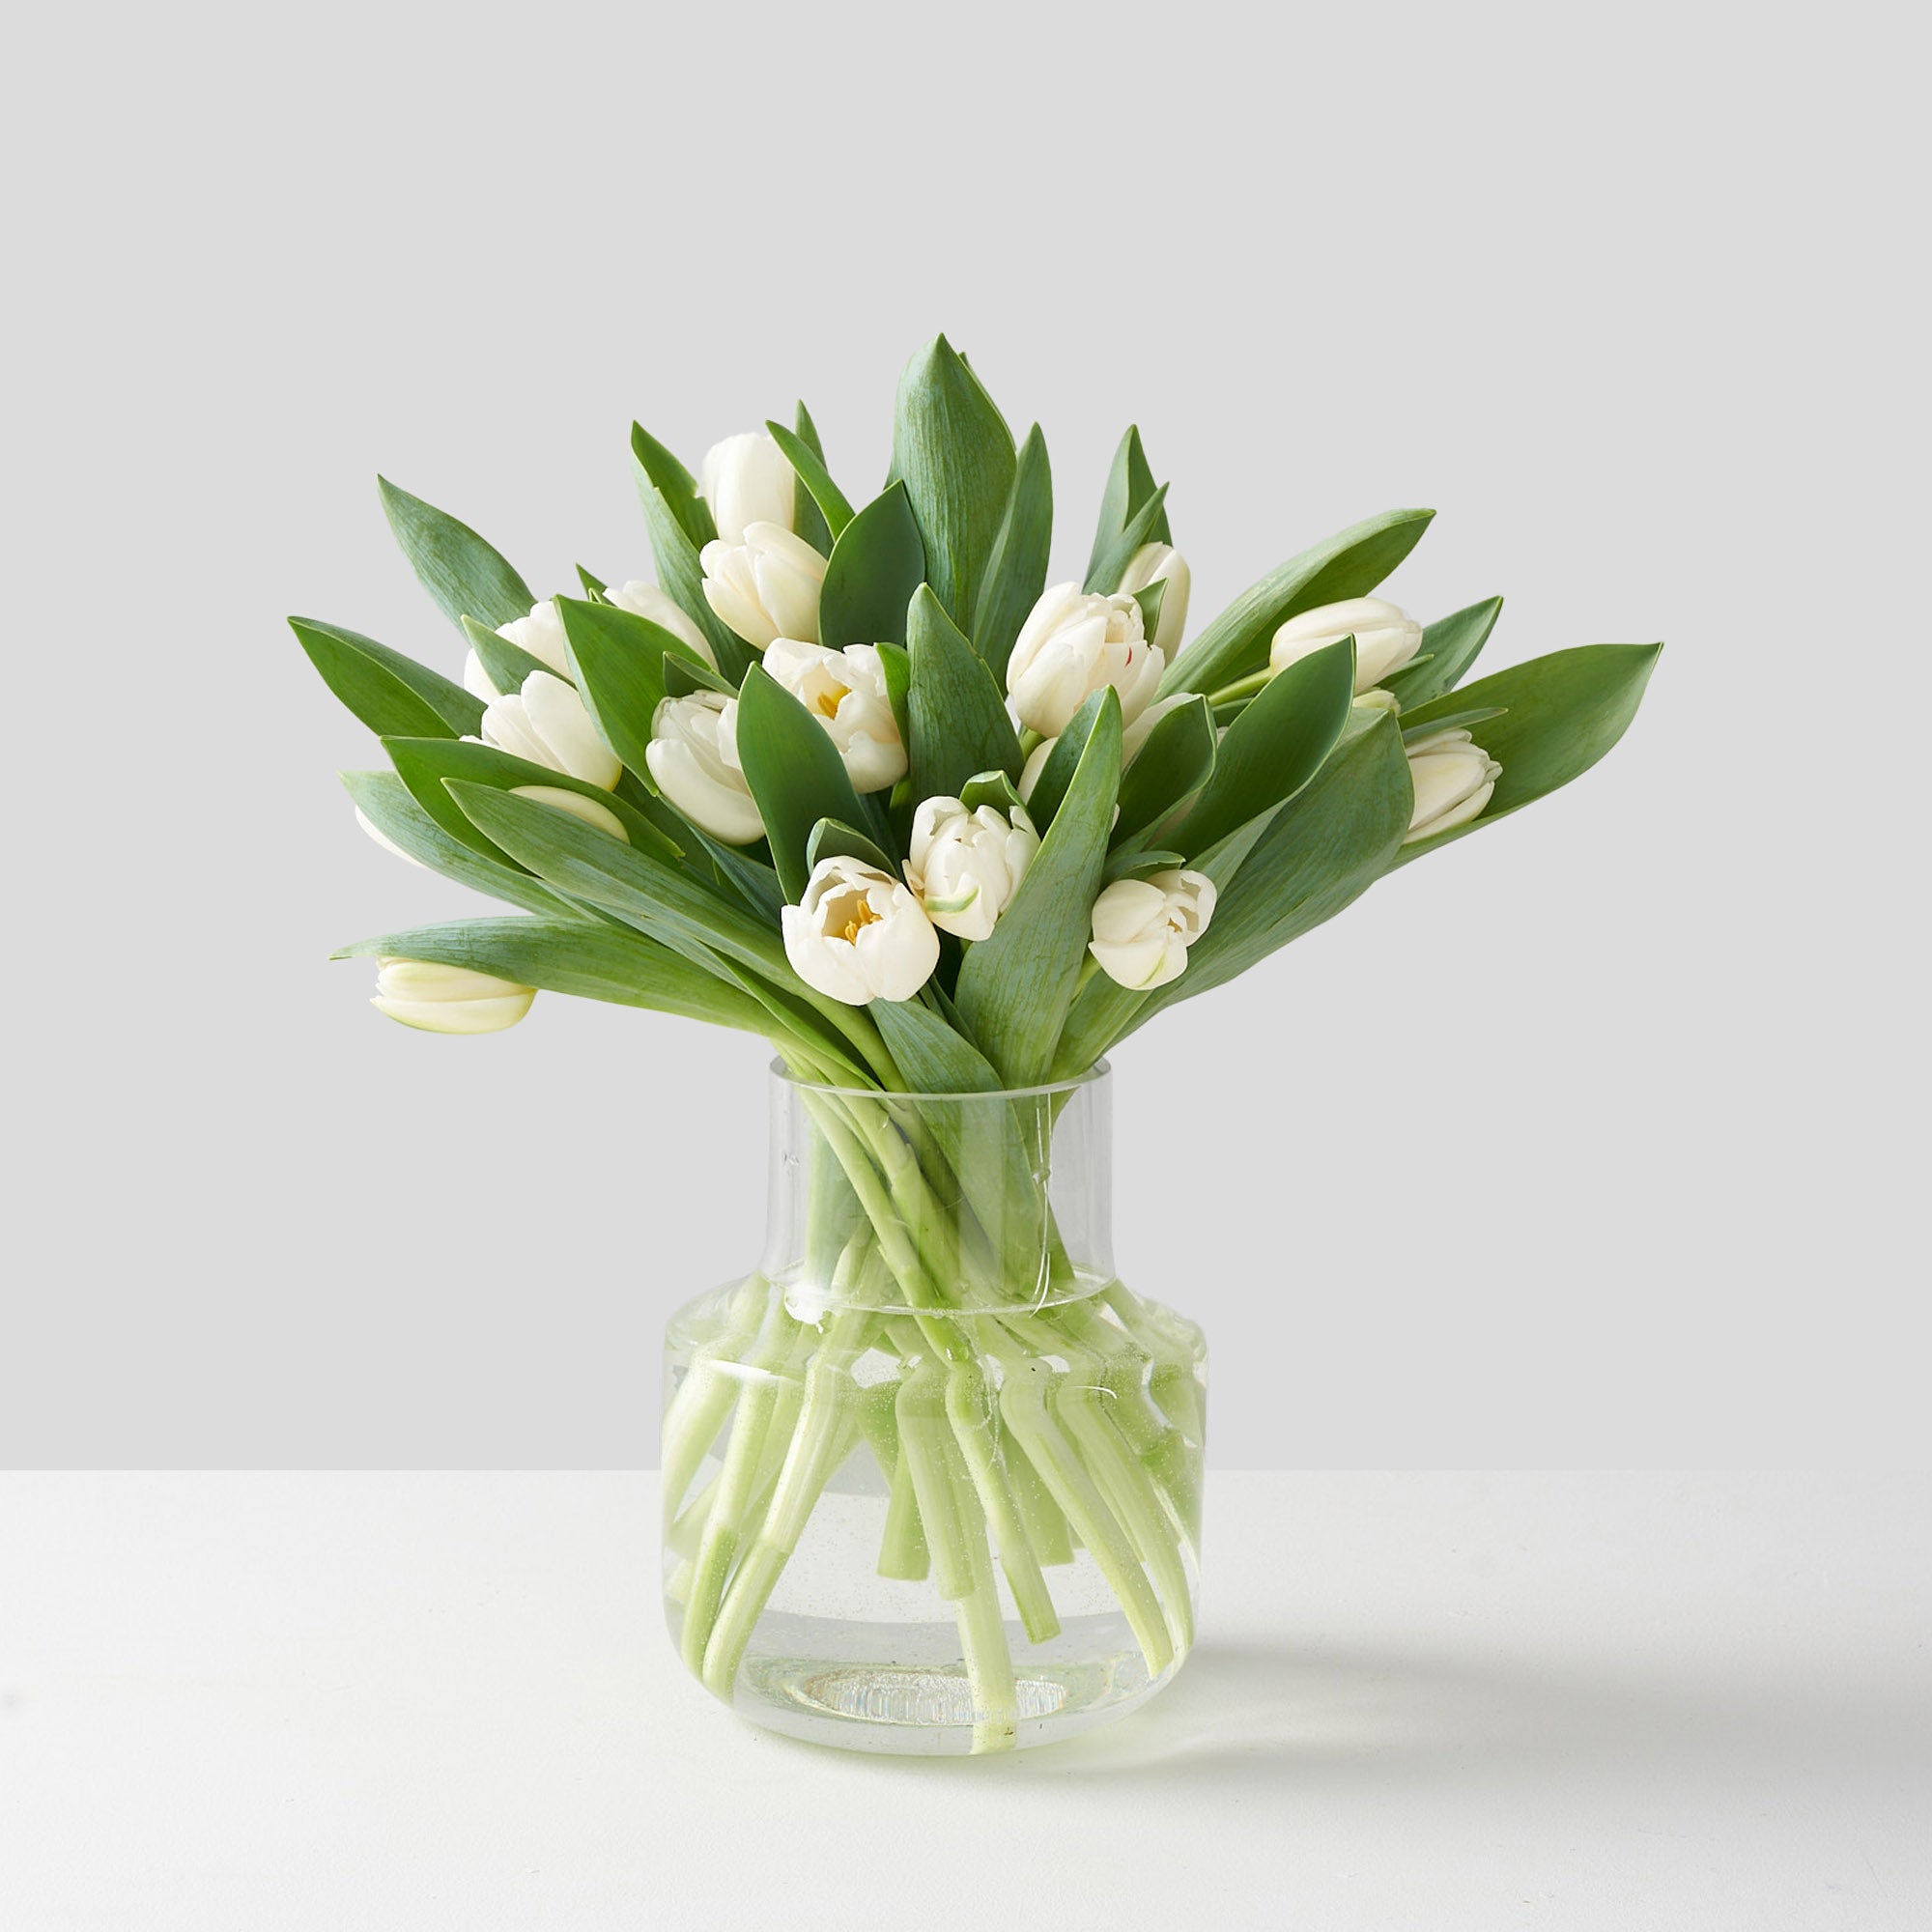 Willa (Arranged White Tulips)